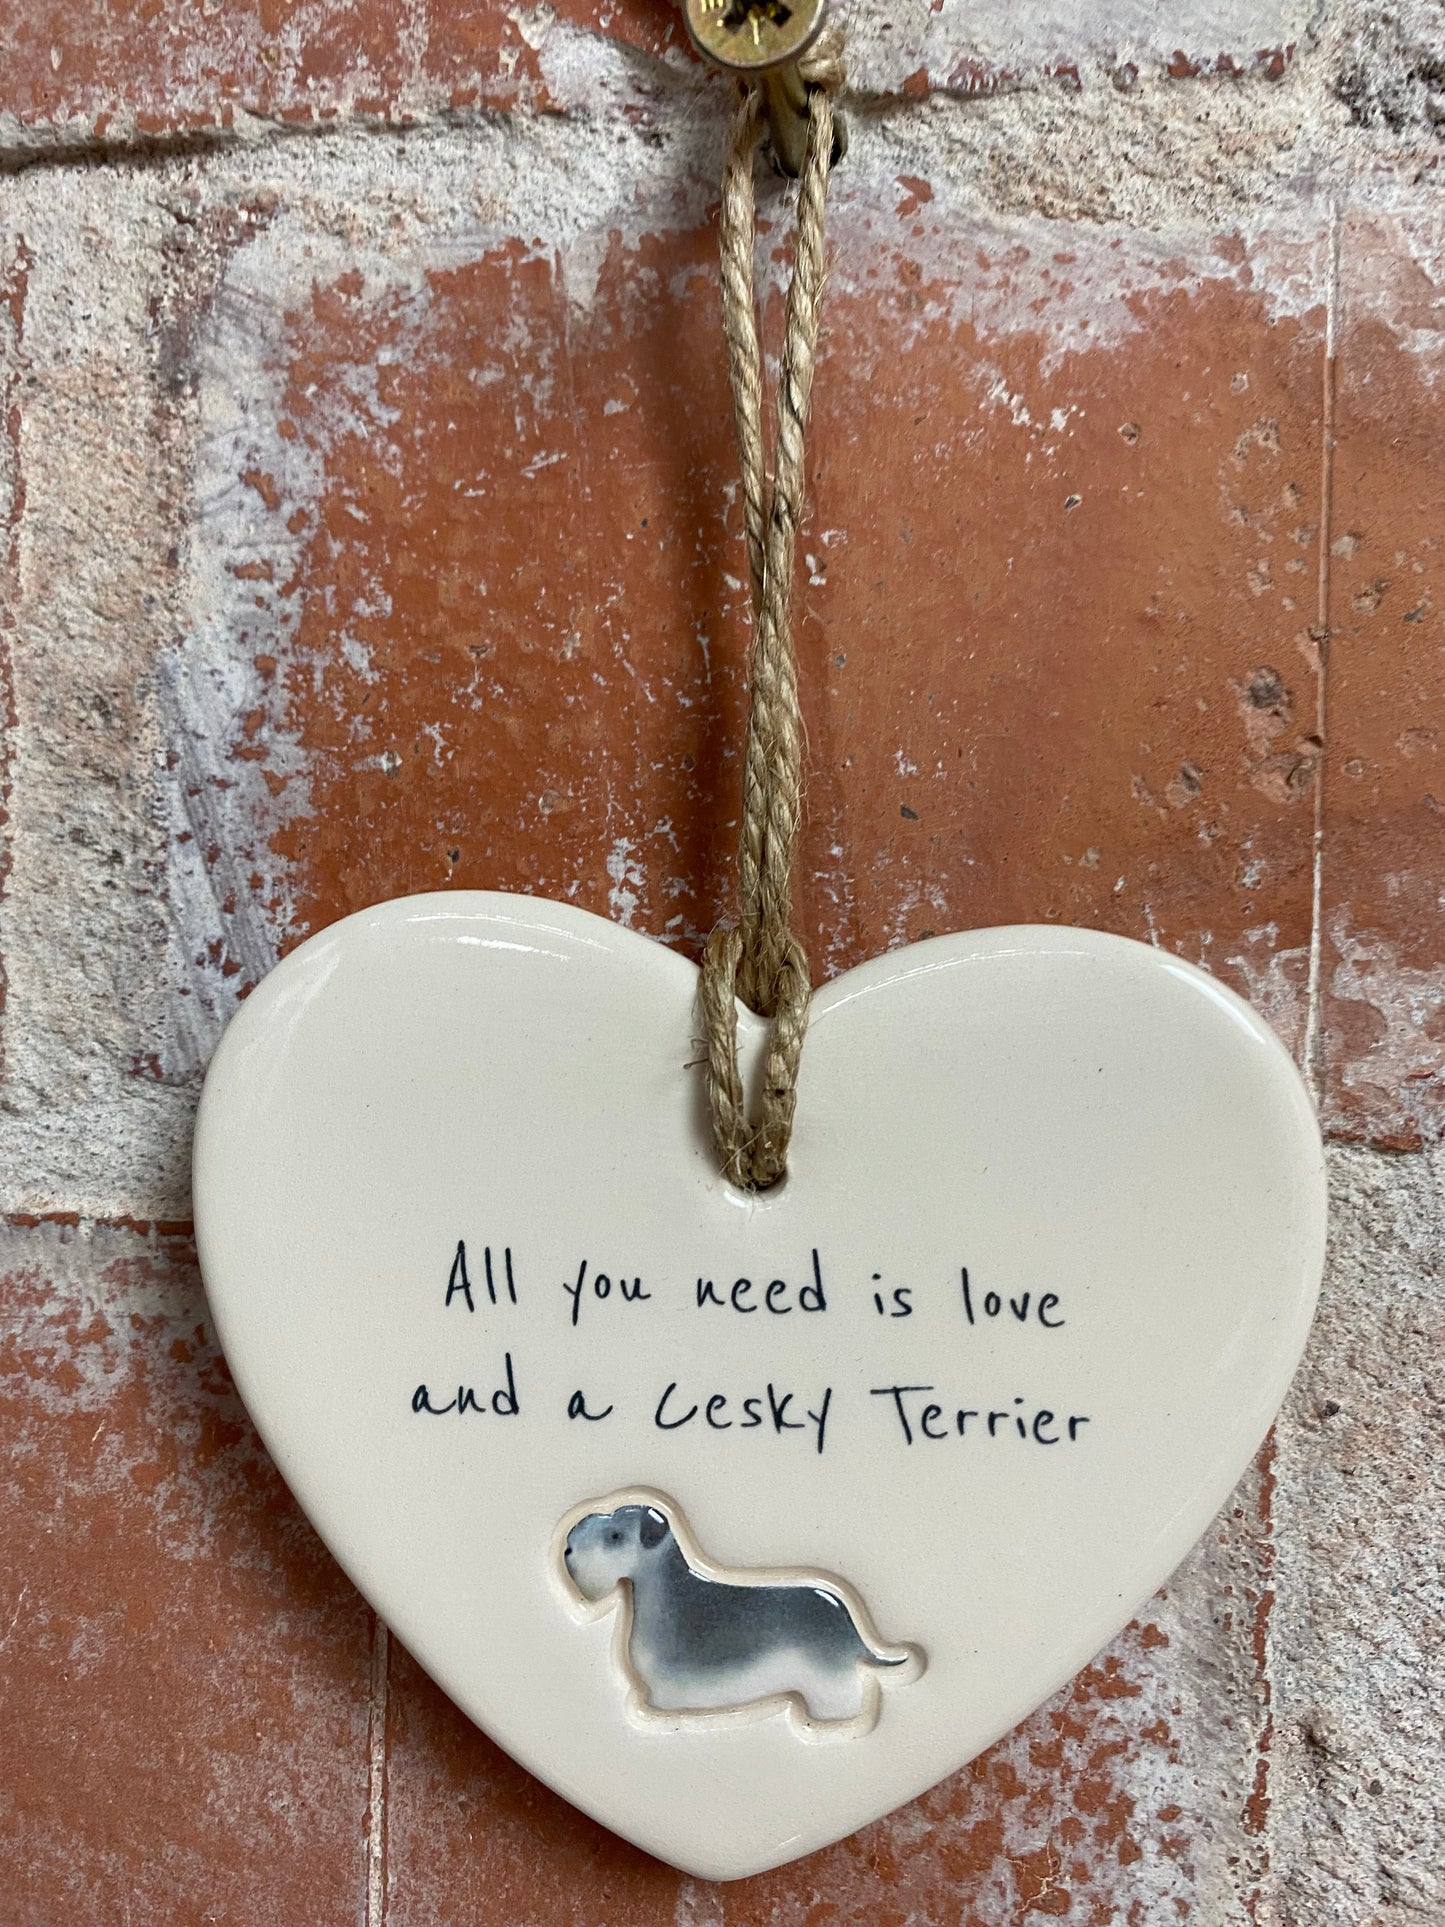 Cesky Terrier heart